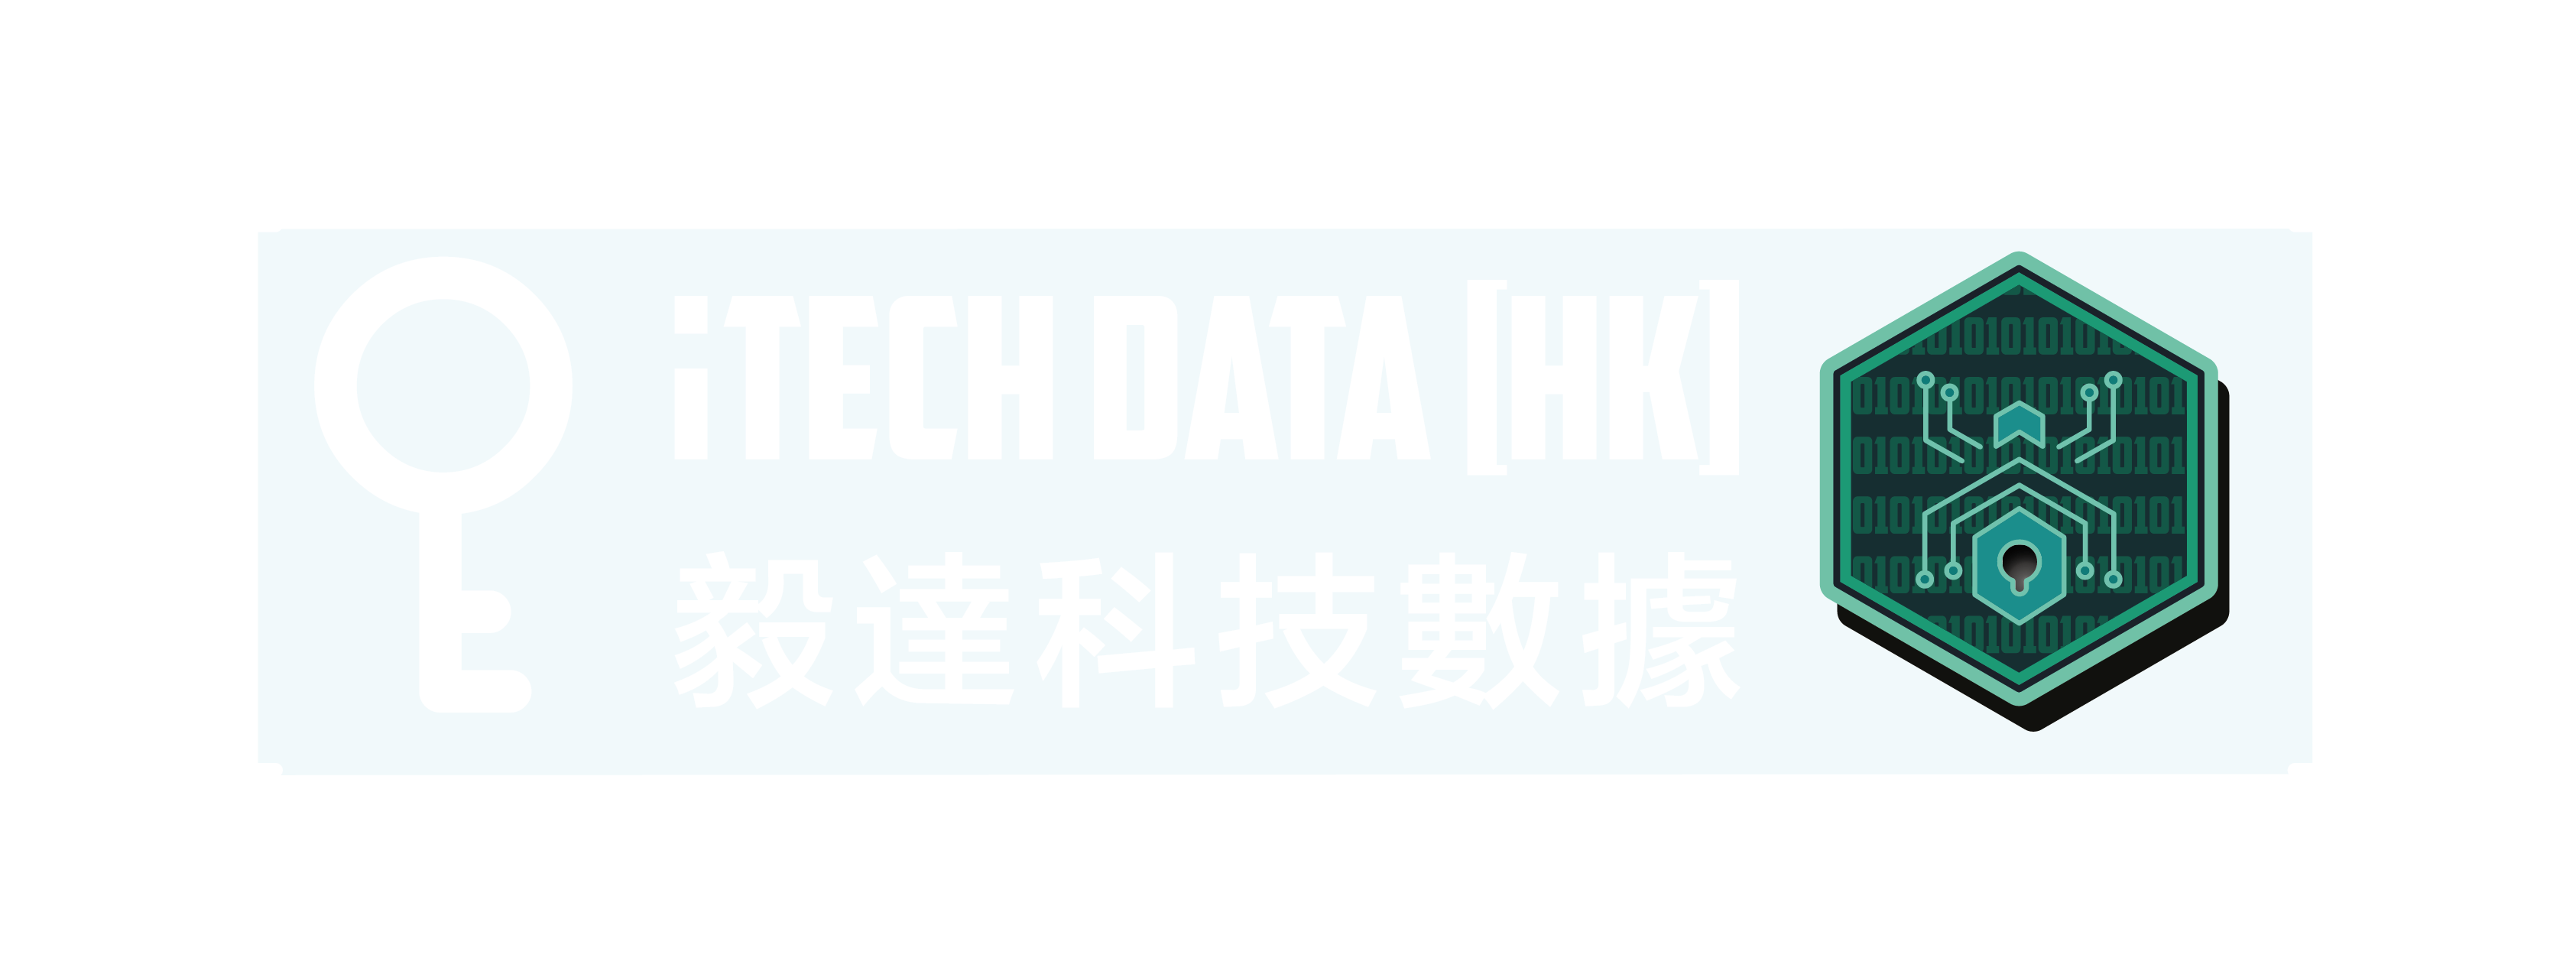 iTech Logo